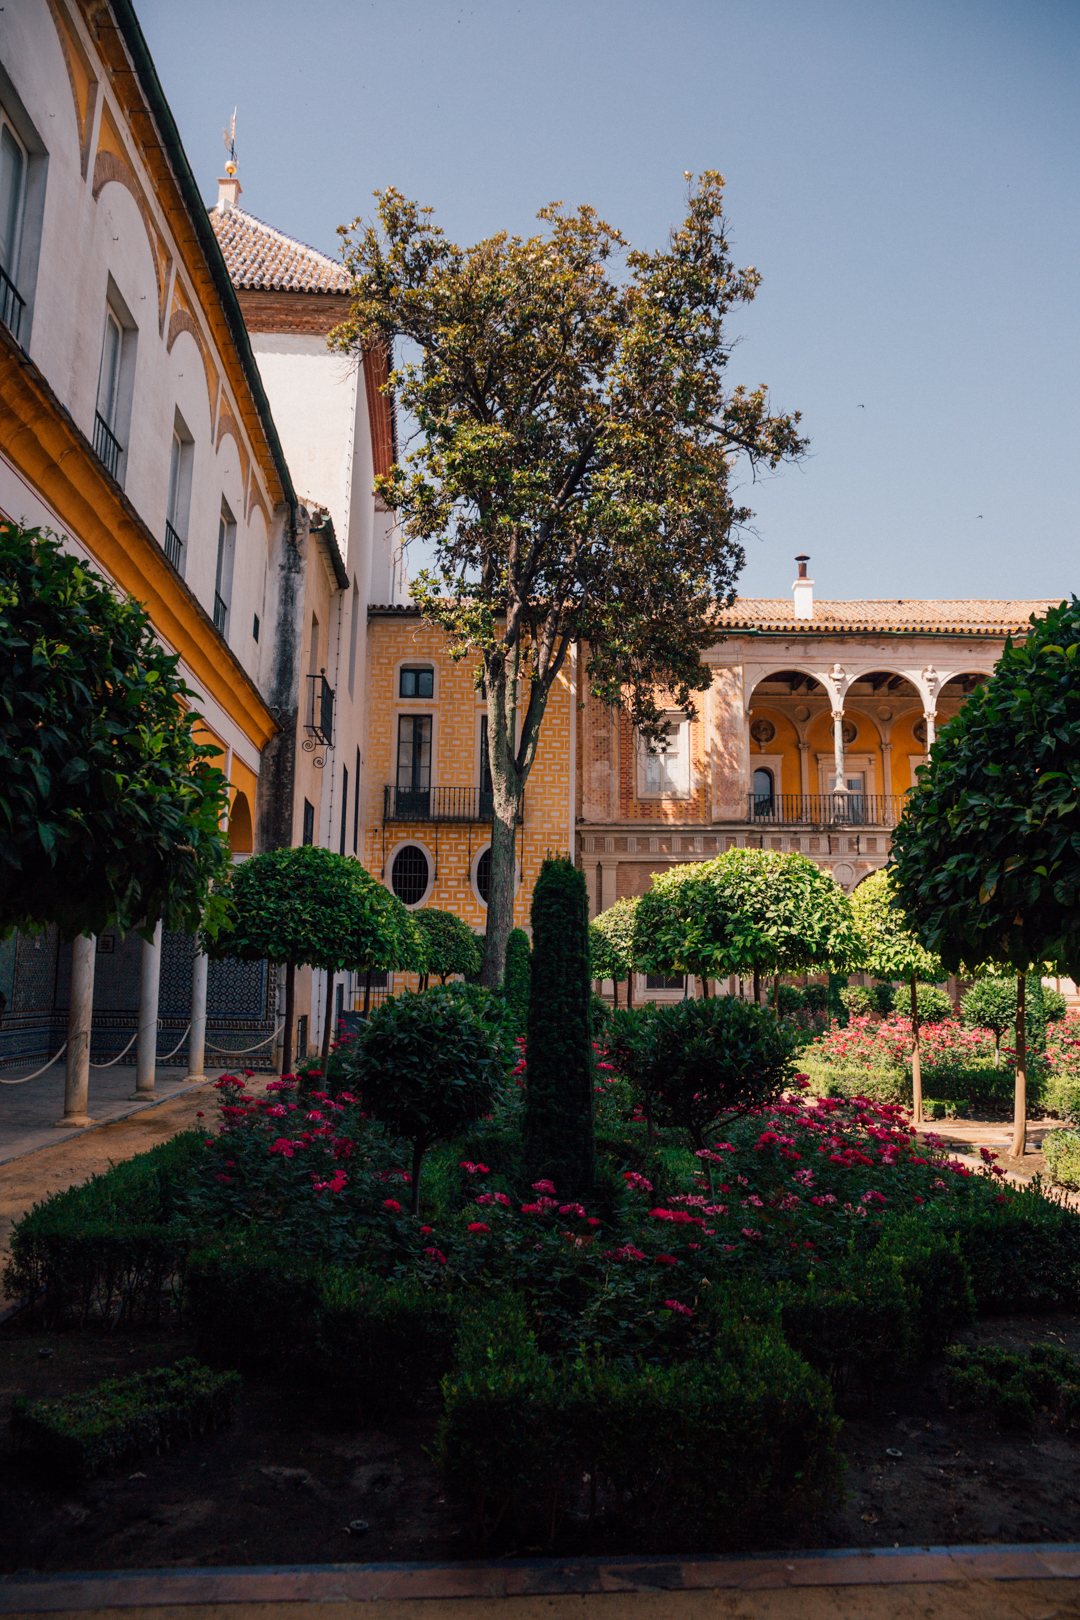 Casa de Pilatos in Seville, Spain